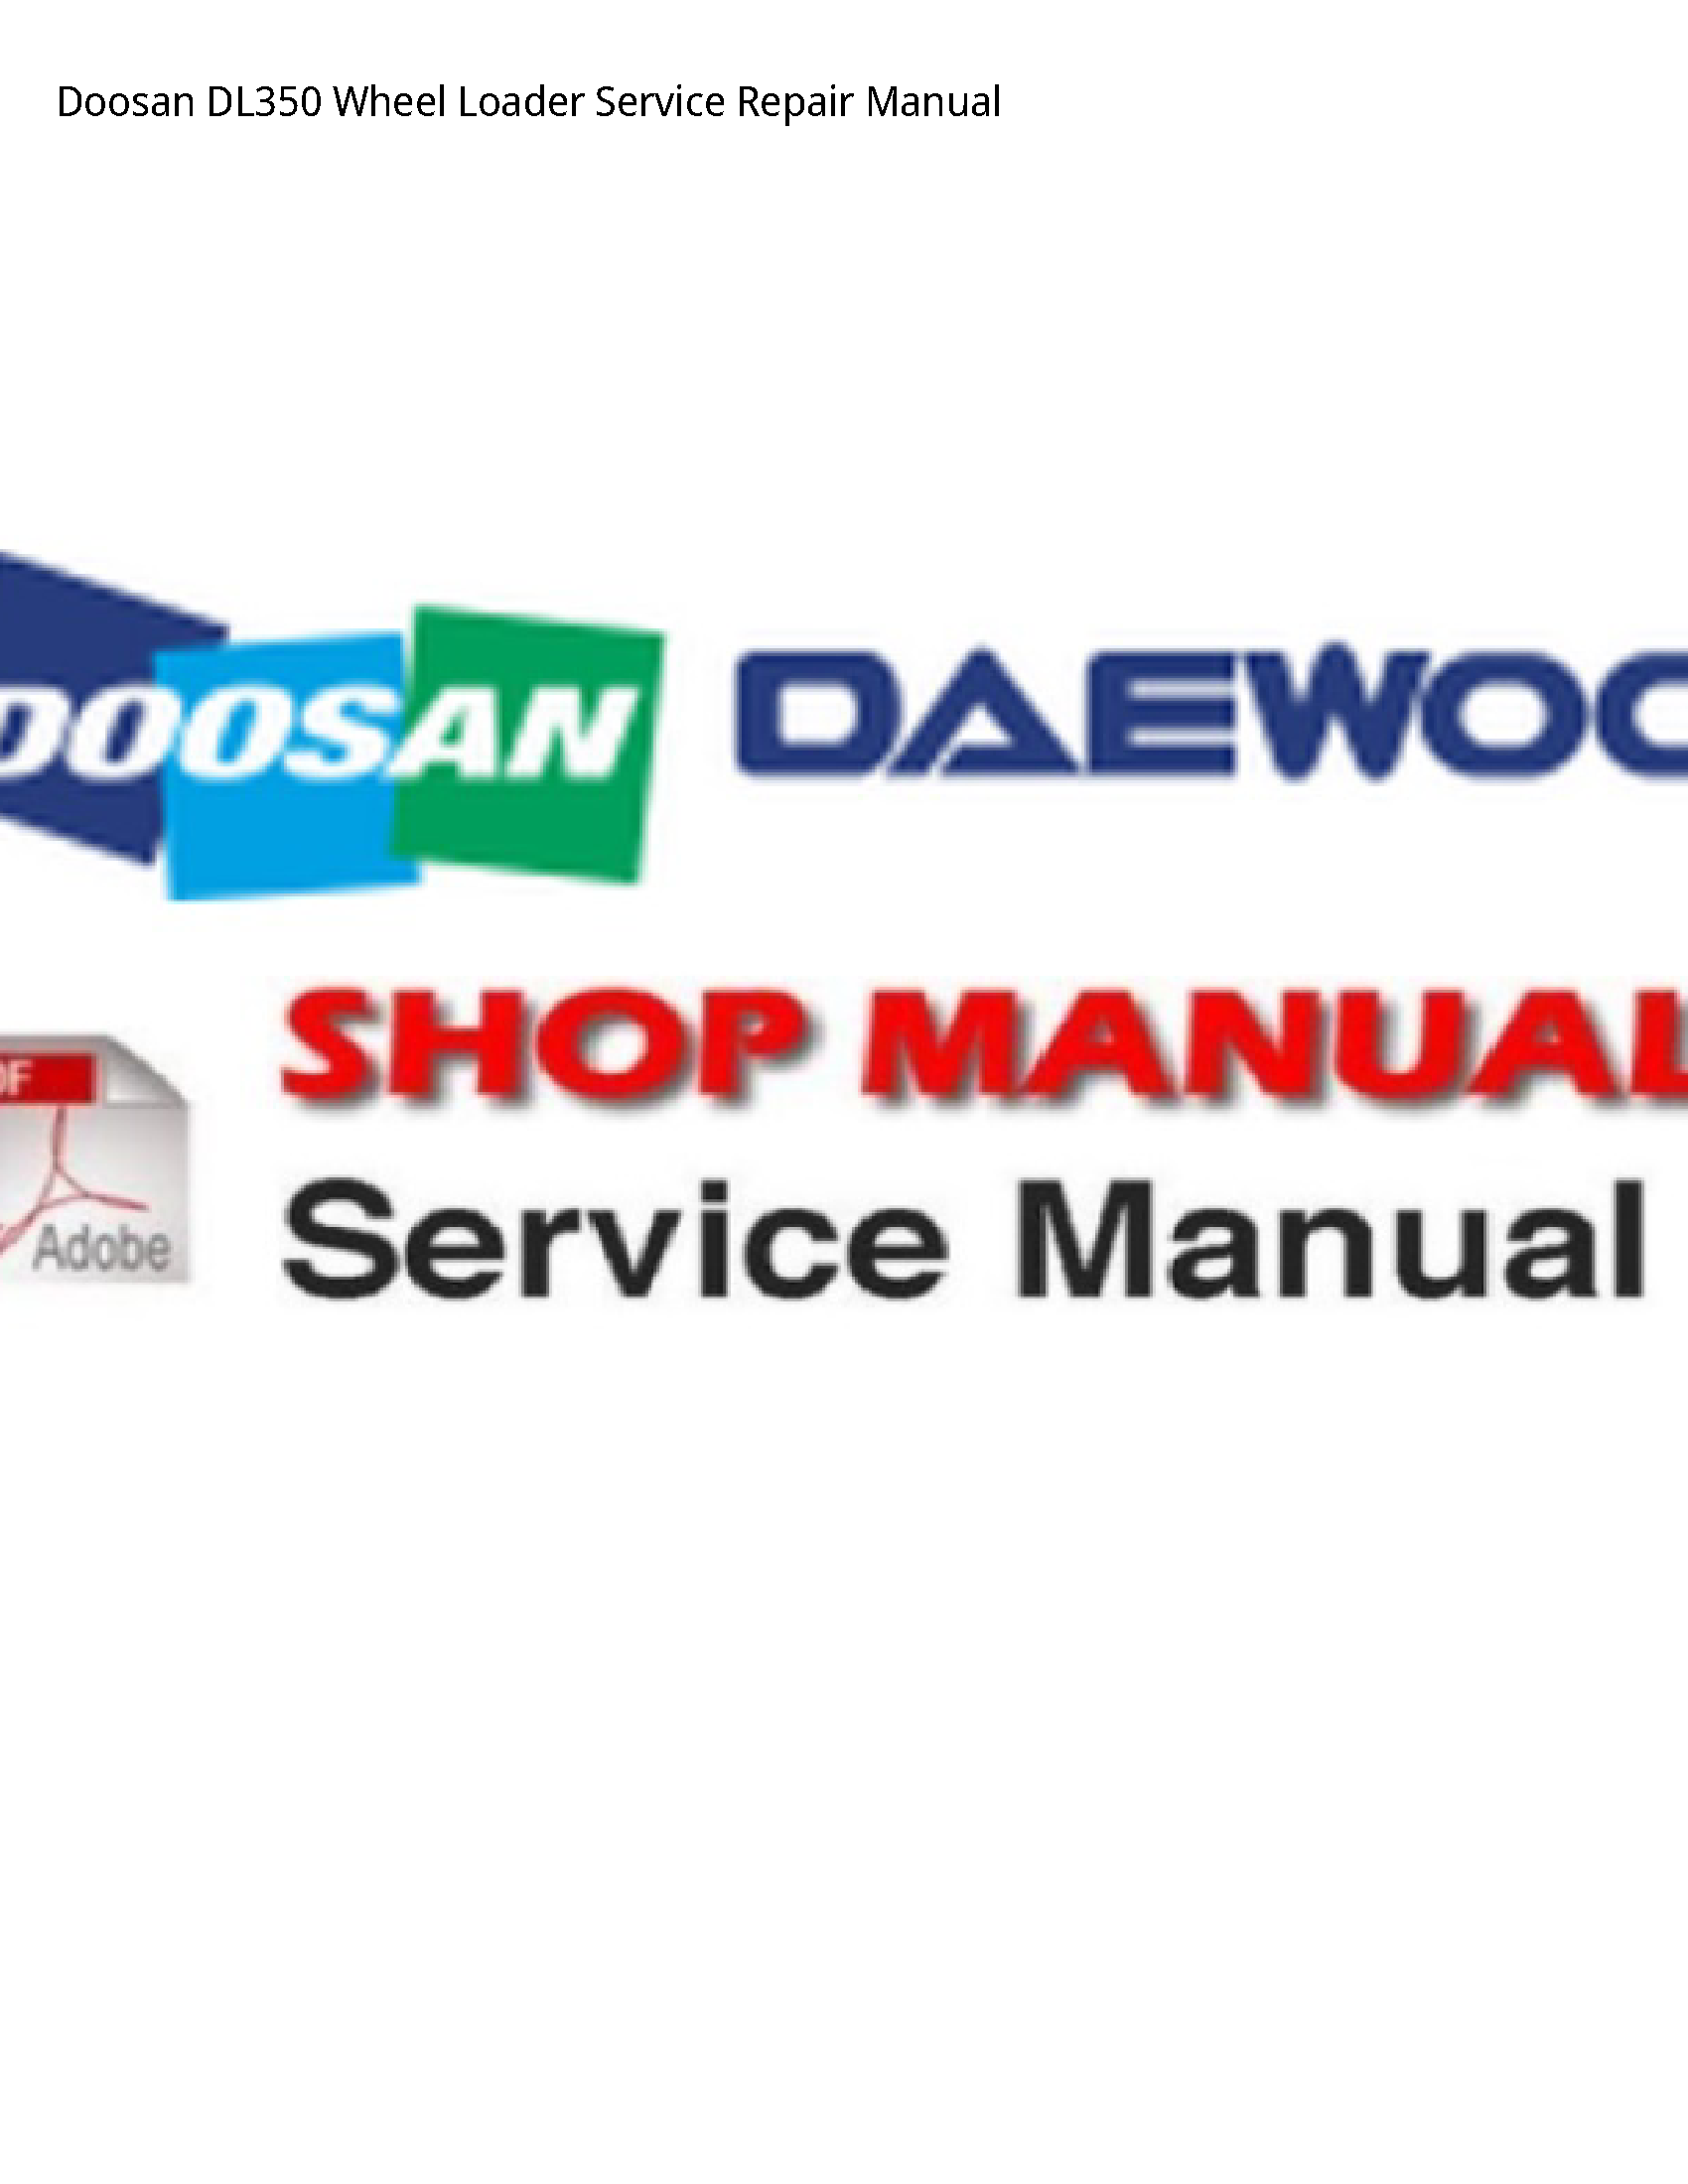 Doosan DL350 Wheel Loader manual